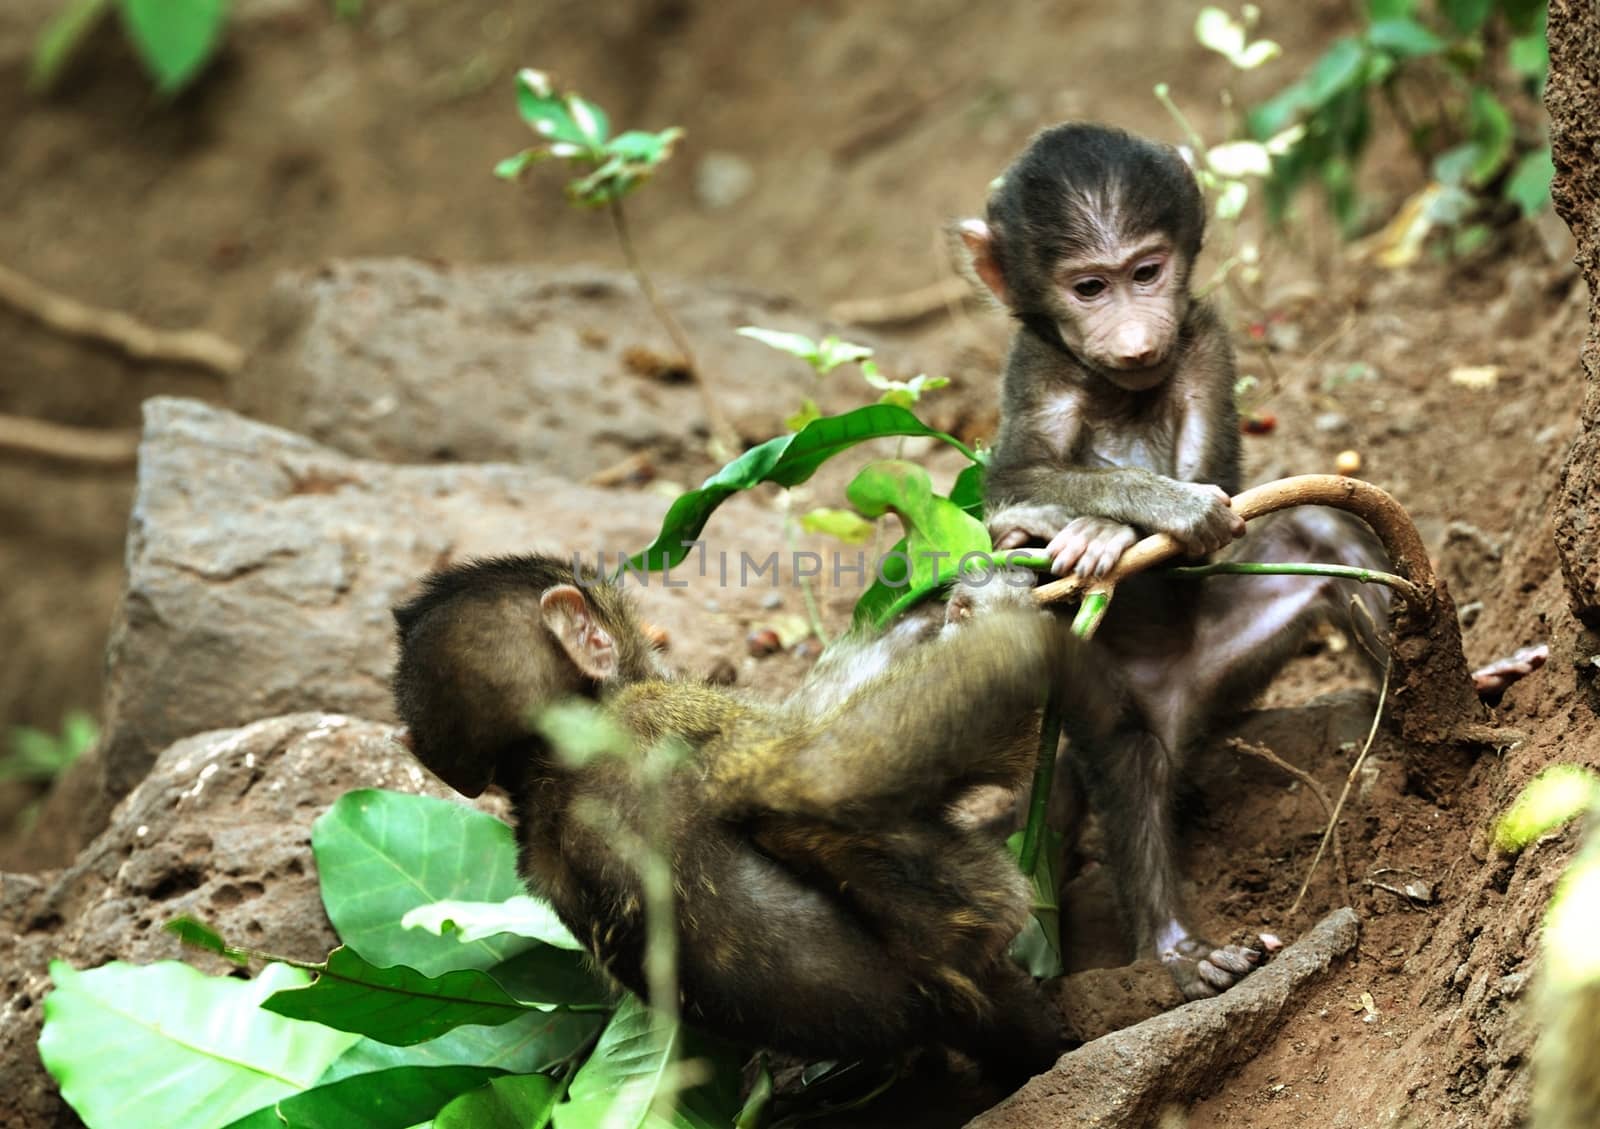 Chimpanzee in the wild by moizhusein